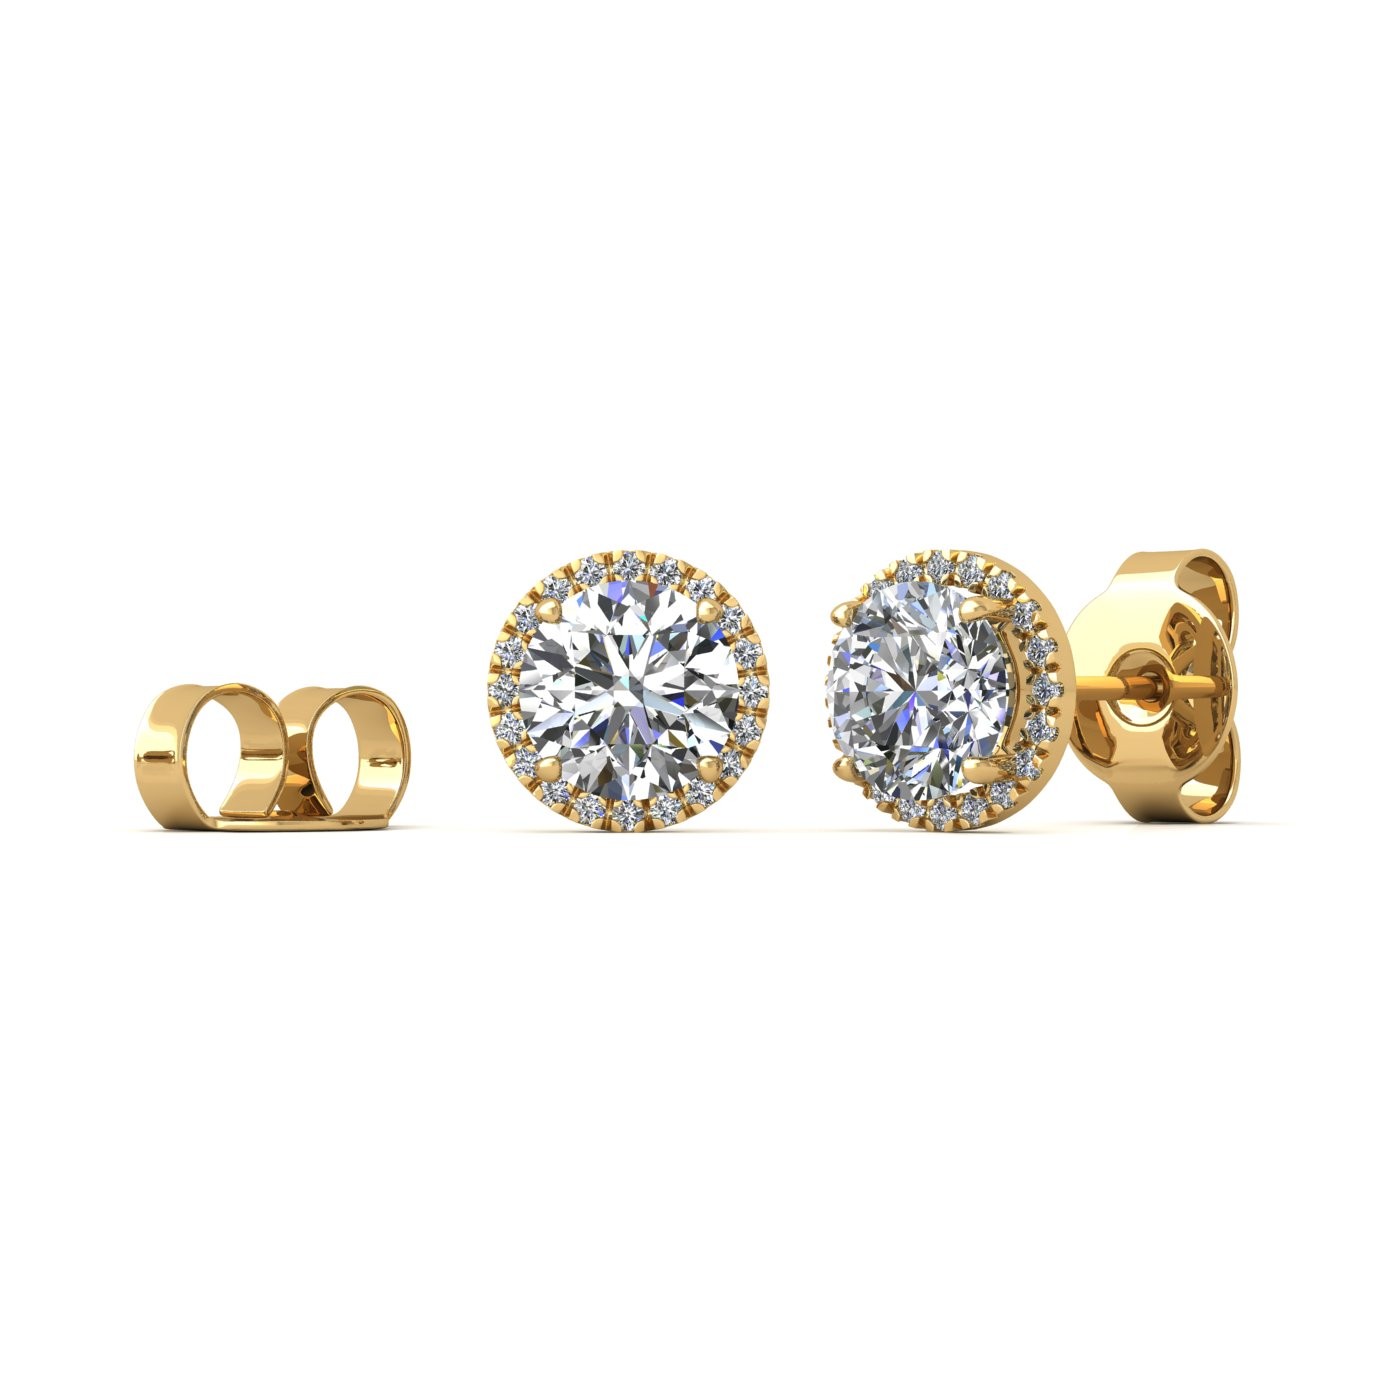 18k white gold  0,3 ct each (0,6 tcw) 4 prongs round shape diamond earrings with diamond pavÉ set halo Photos & images